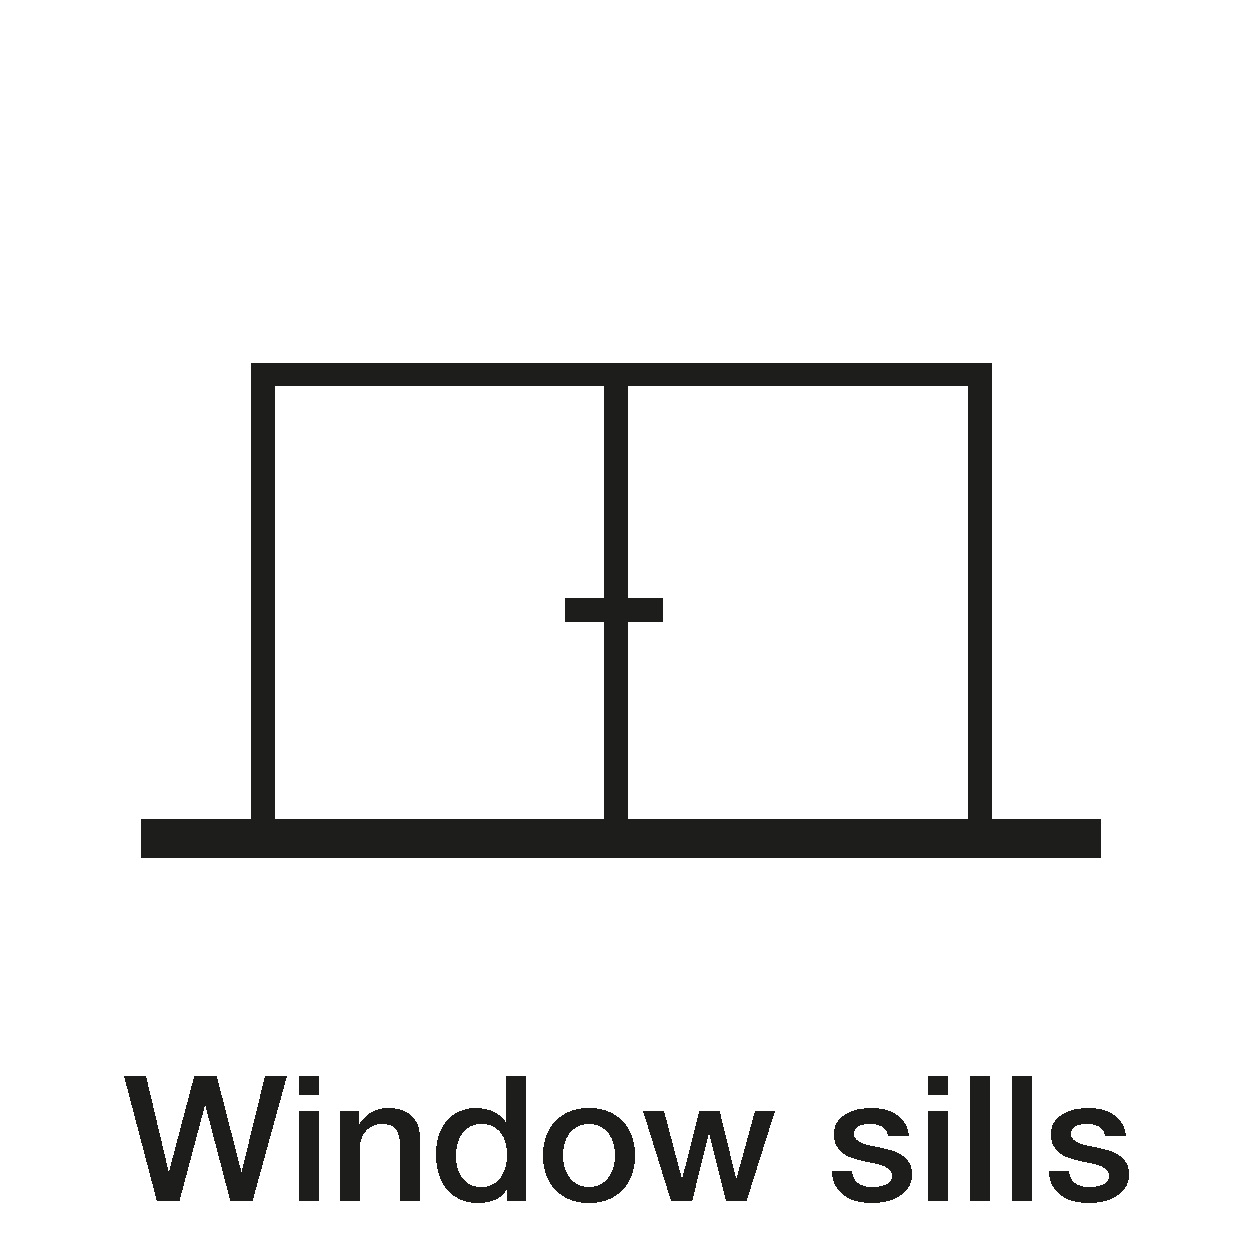 Window sills